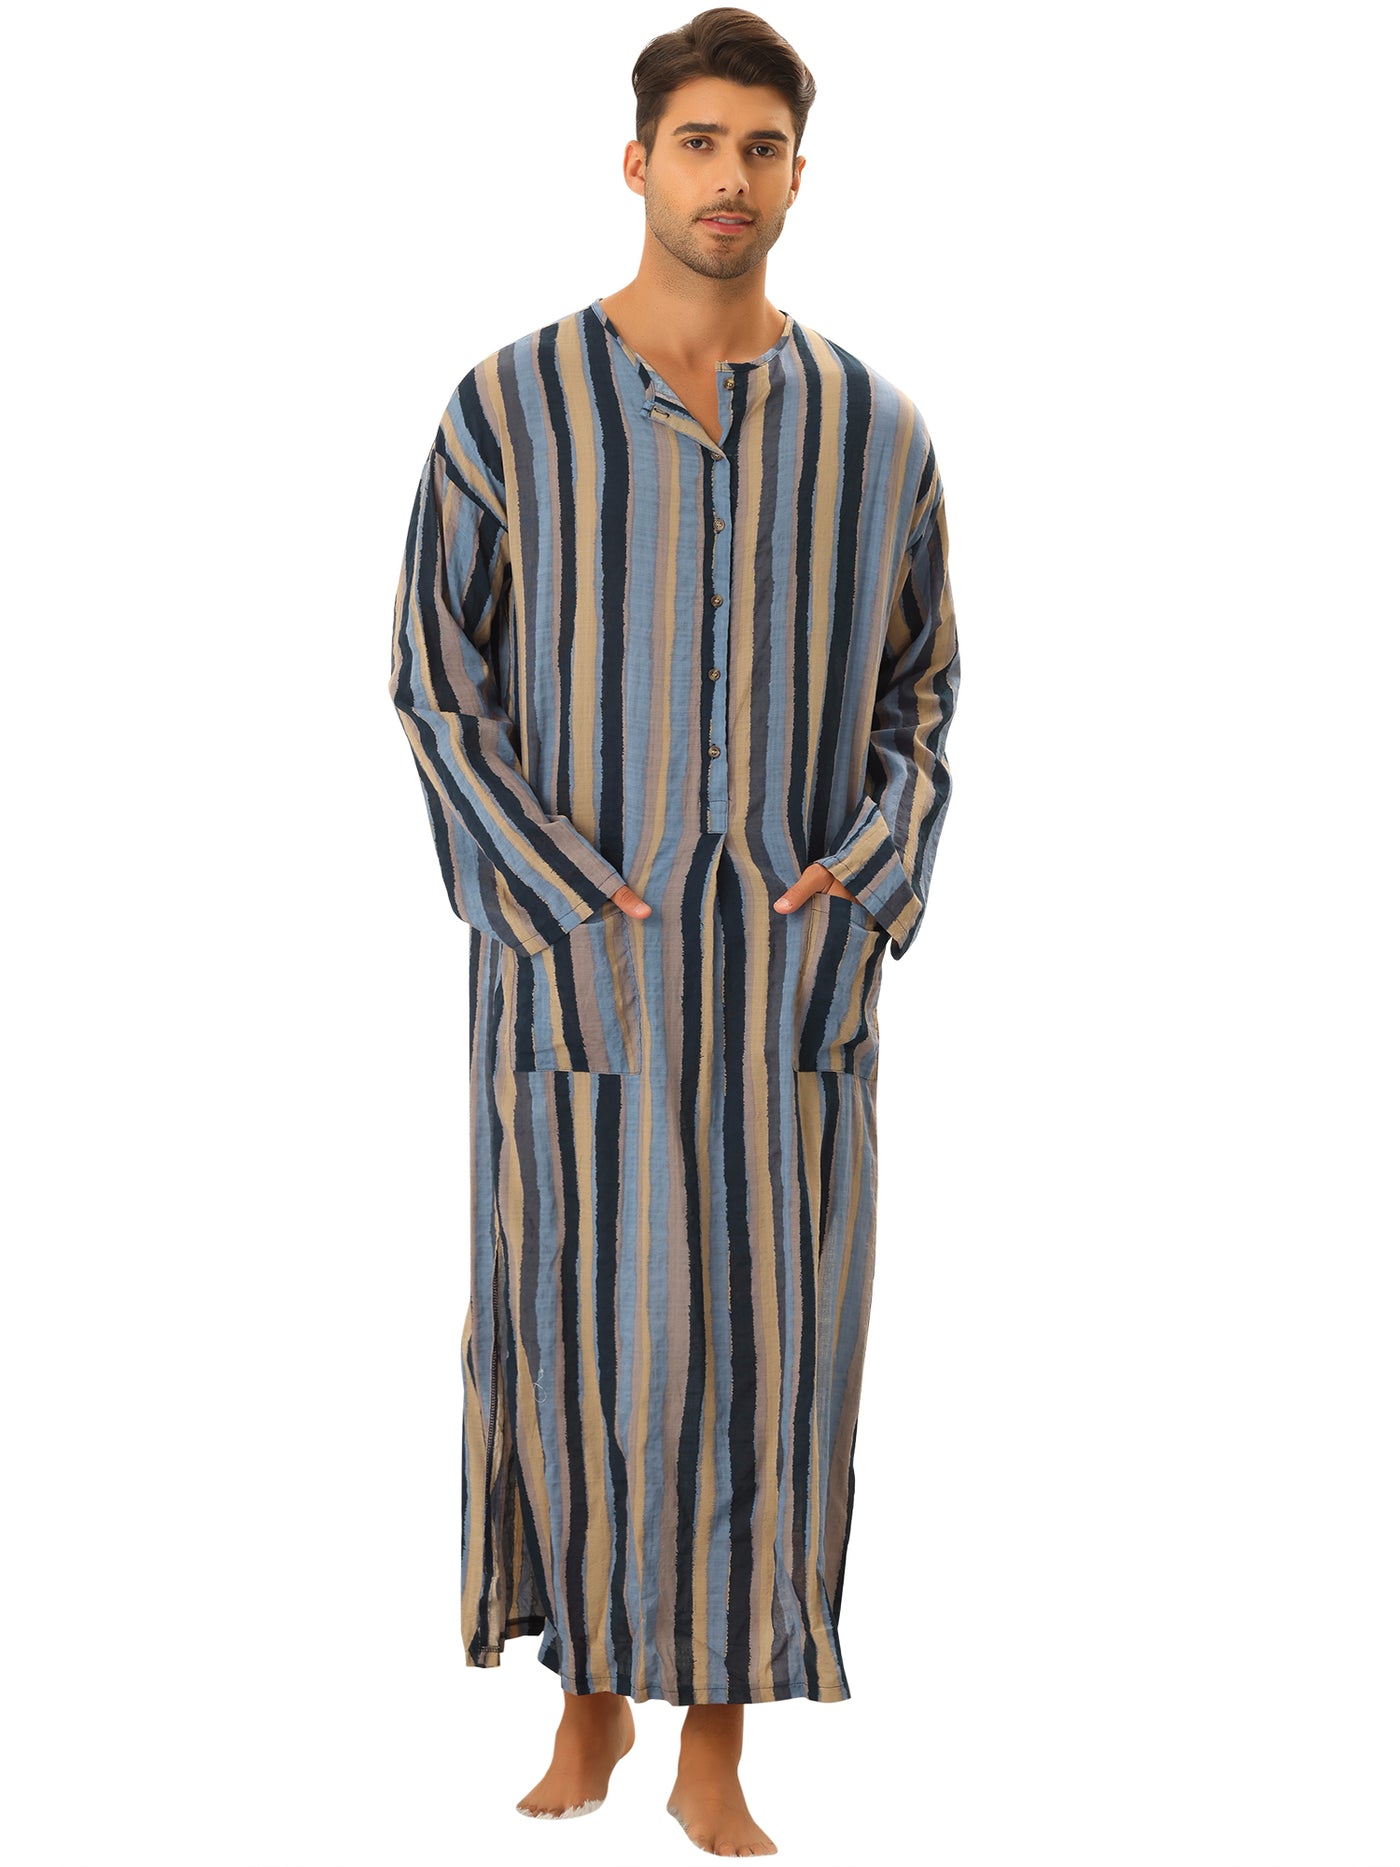 Bublédon Men's Striped Nightshirt Button Long Sleeve Henley Nightgown